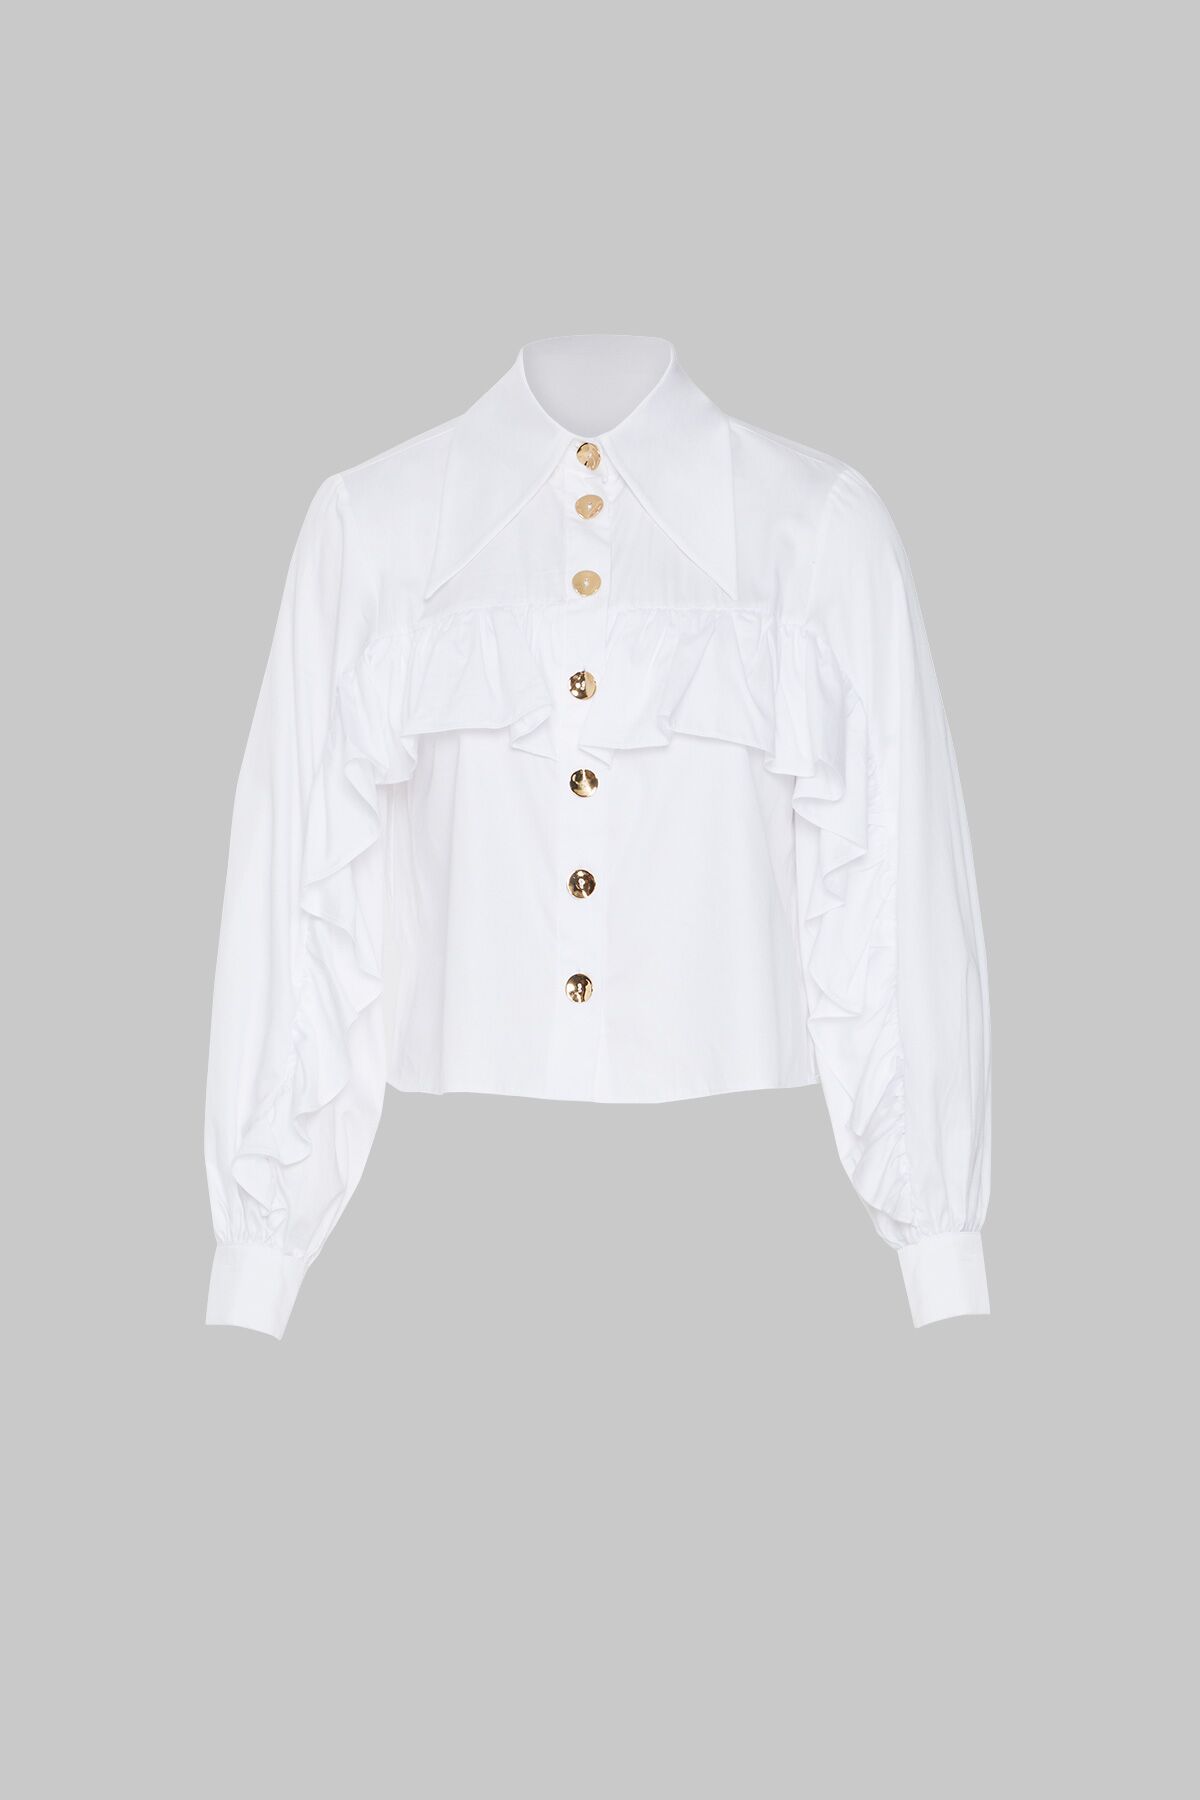 KIWE - Flywheel Detailed Design Poplin White Shirt